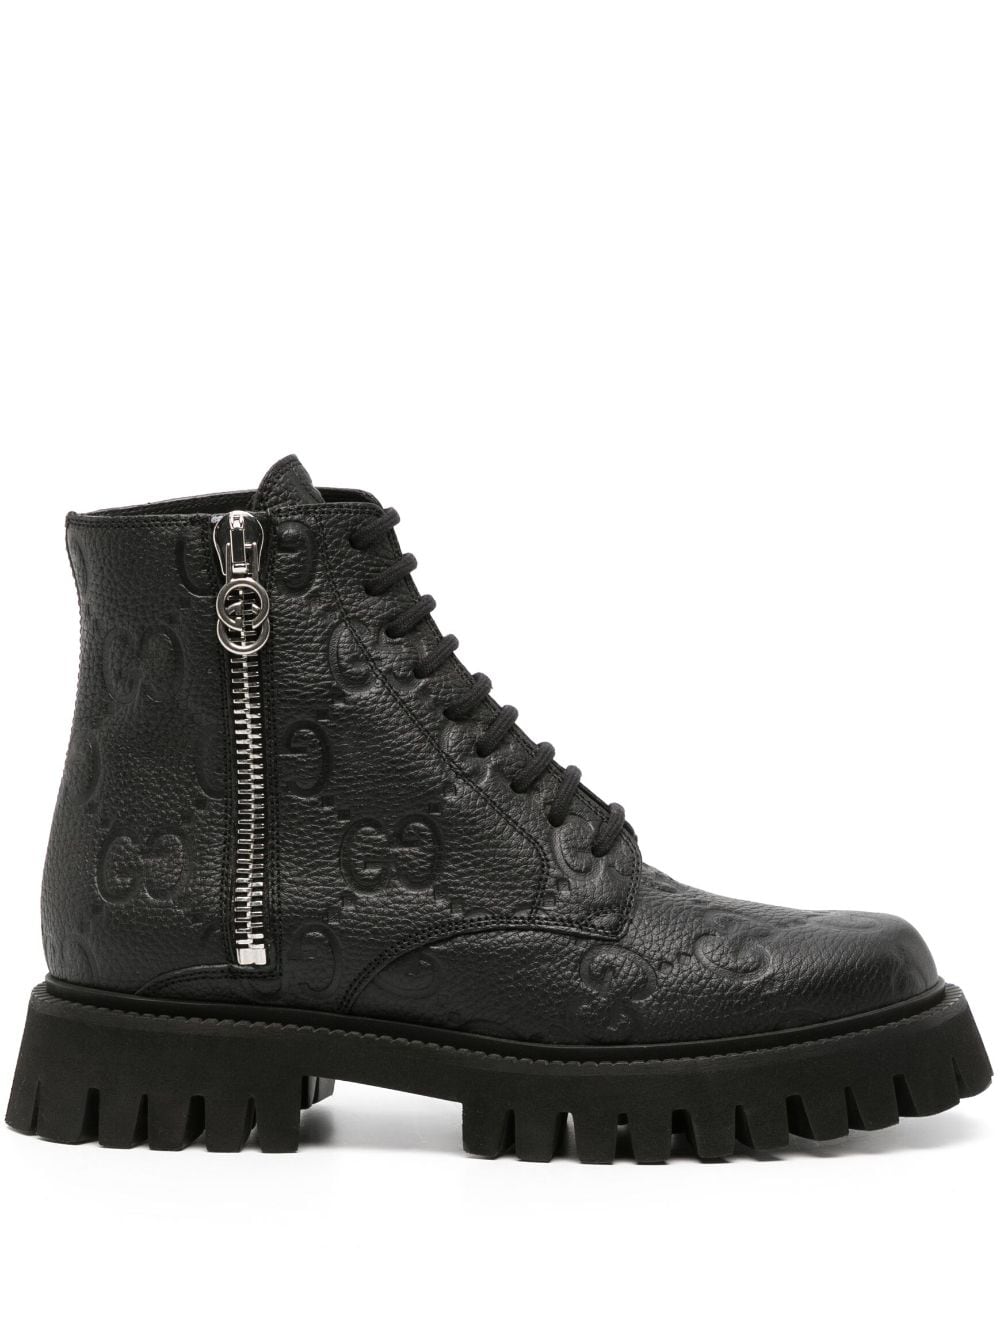 Gucci GG ankle leather boots - Black von Gucci